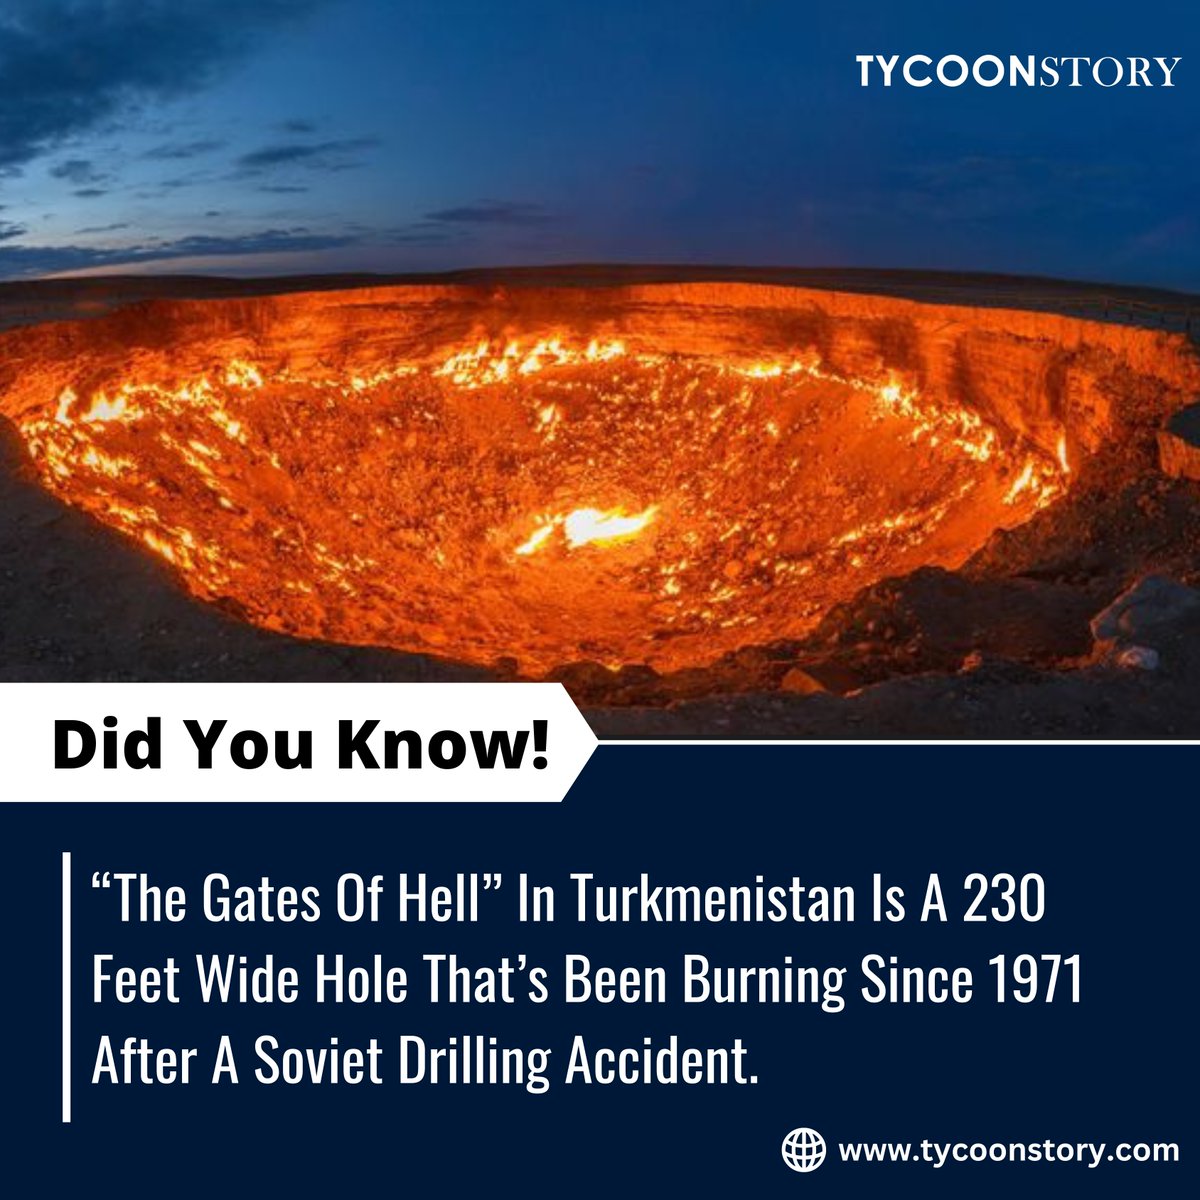 #DidYouKnow #didyouknowfacts #amazingfacts #GatesOfHell #Turkmenistan #DrillingAccident #NaturalPhenomenon #EternalFlame #DarvazaCrater @TycoonStoryCo @tycoonstory2020 tycoonstory.com